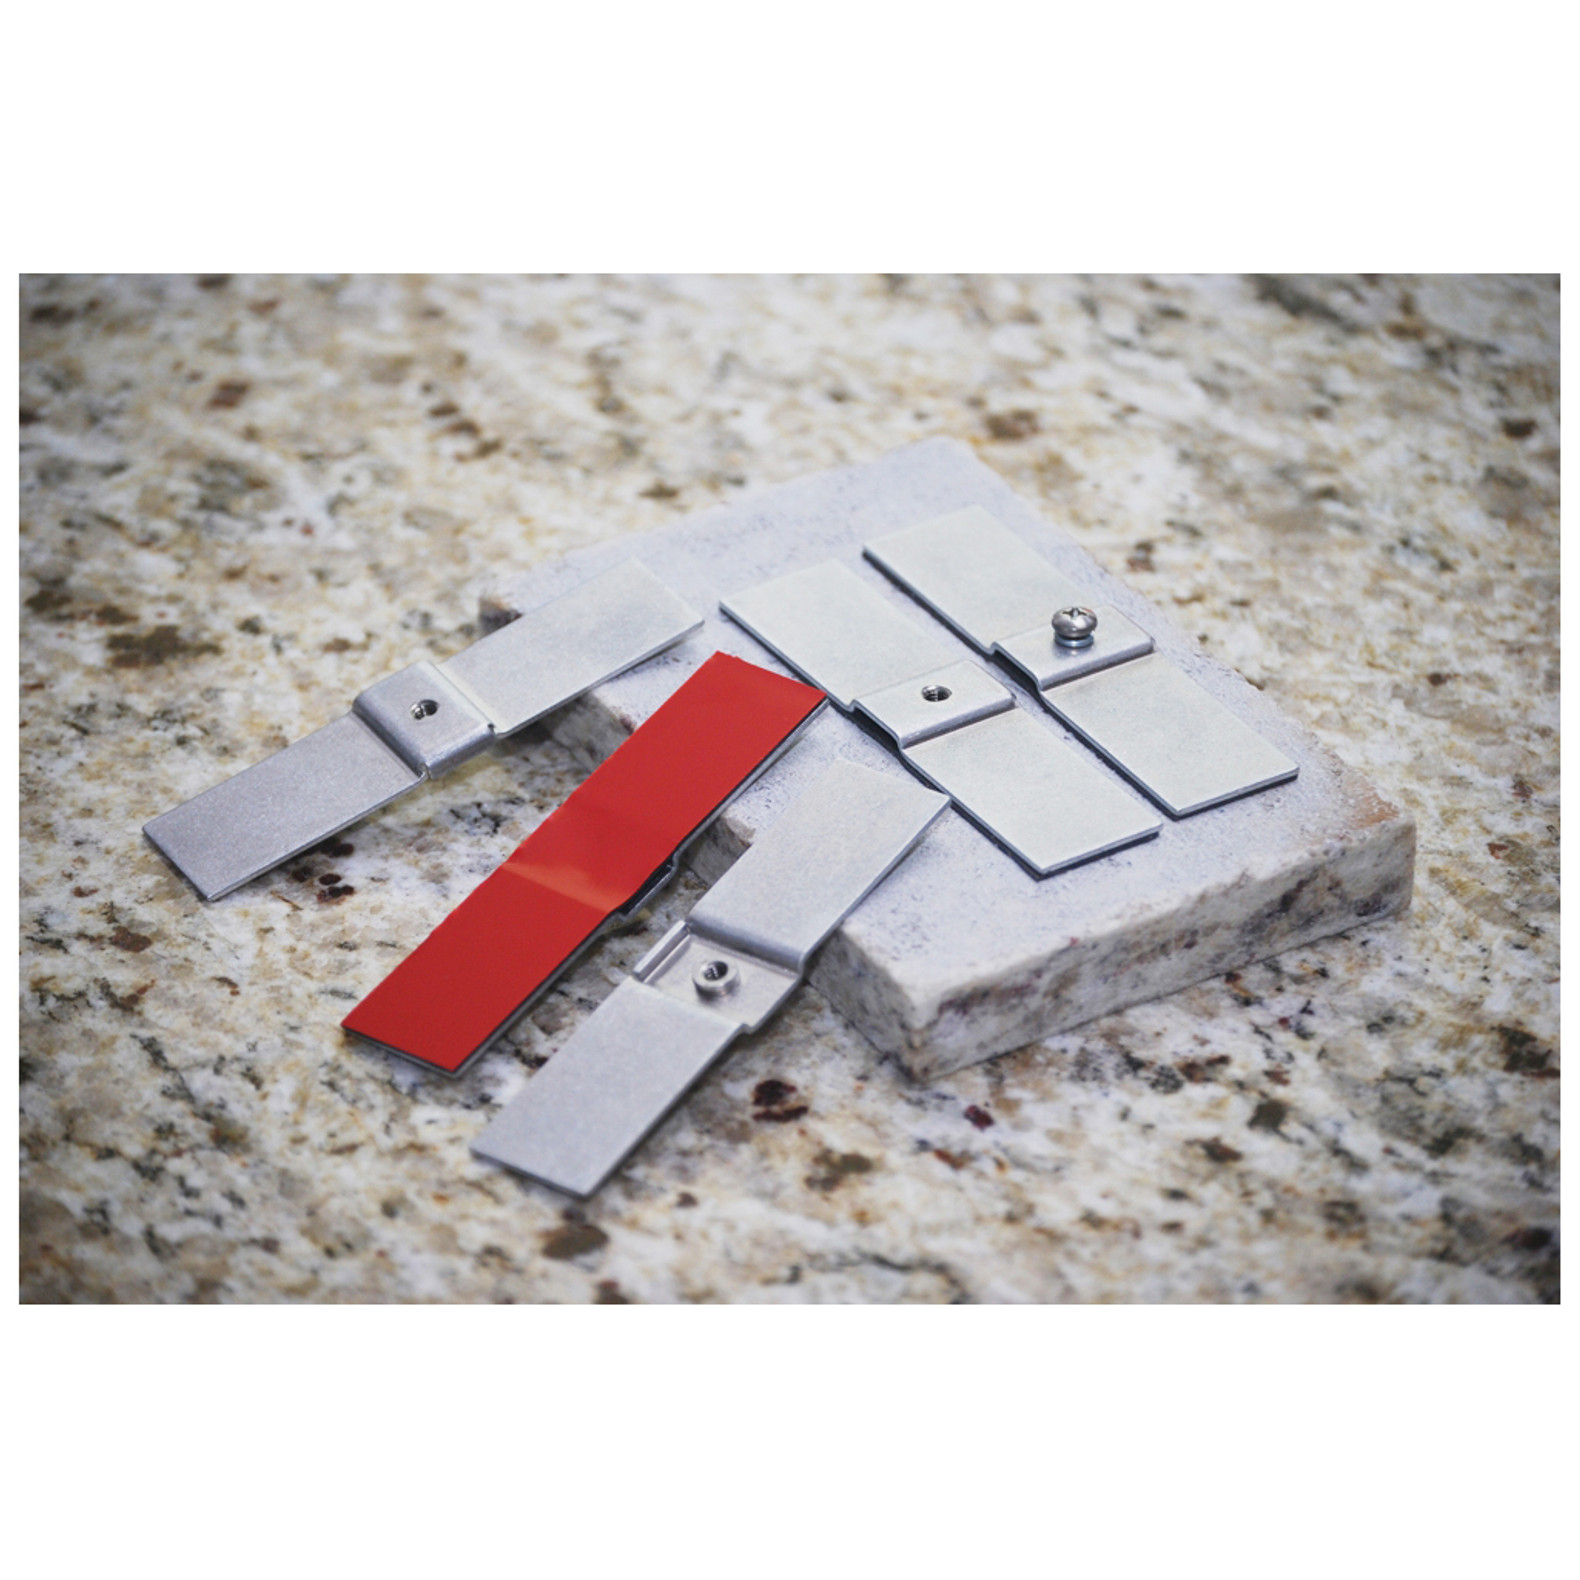 Granite Grabber Dishwasher Mounting Kit - NWest Tools